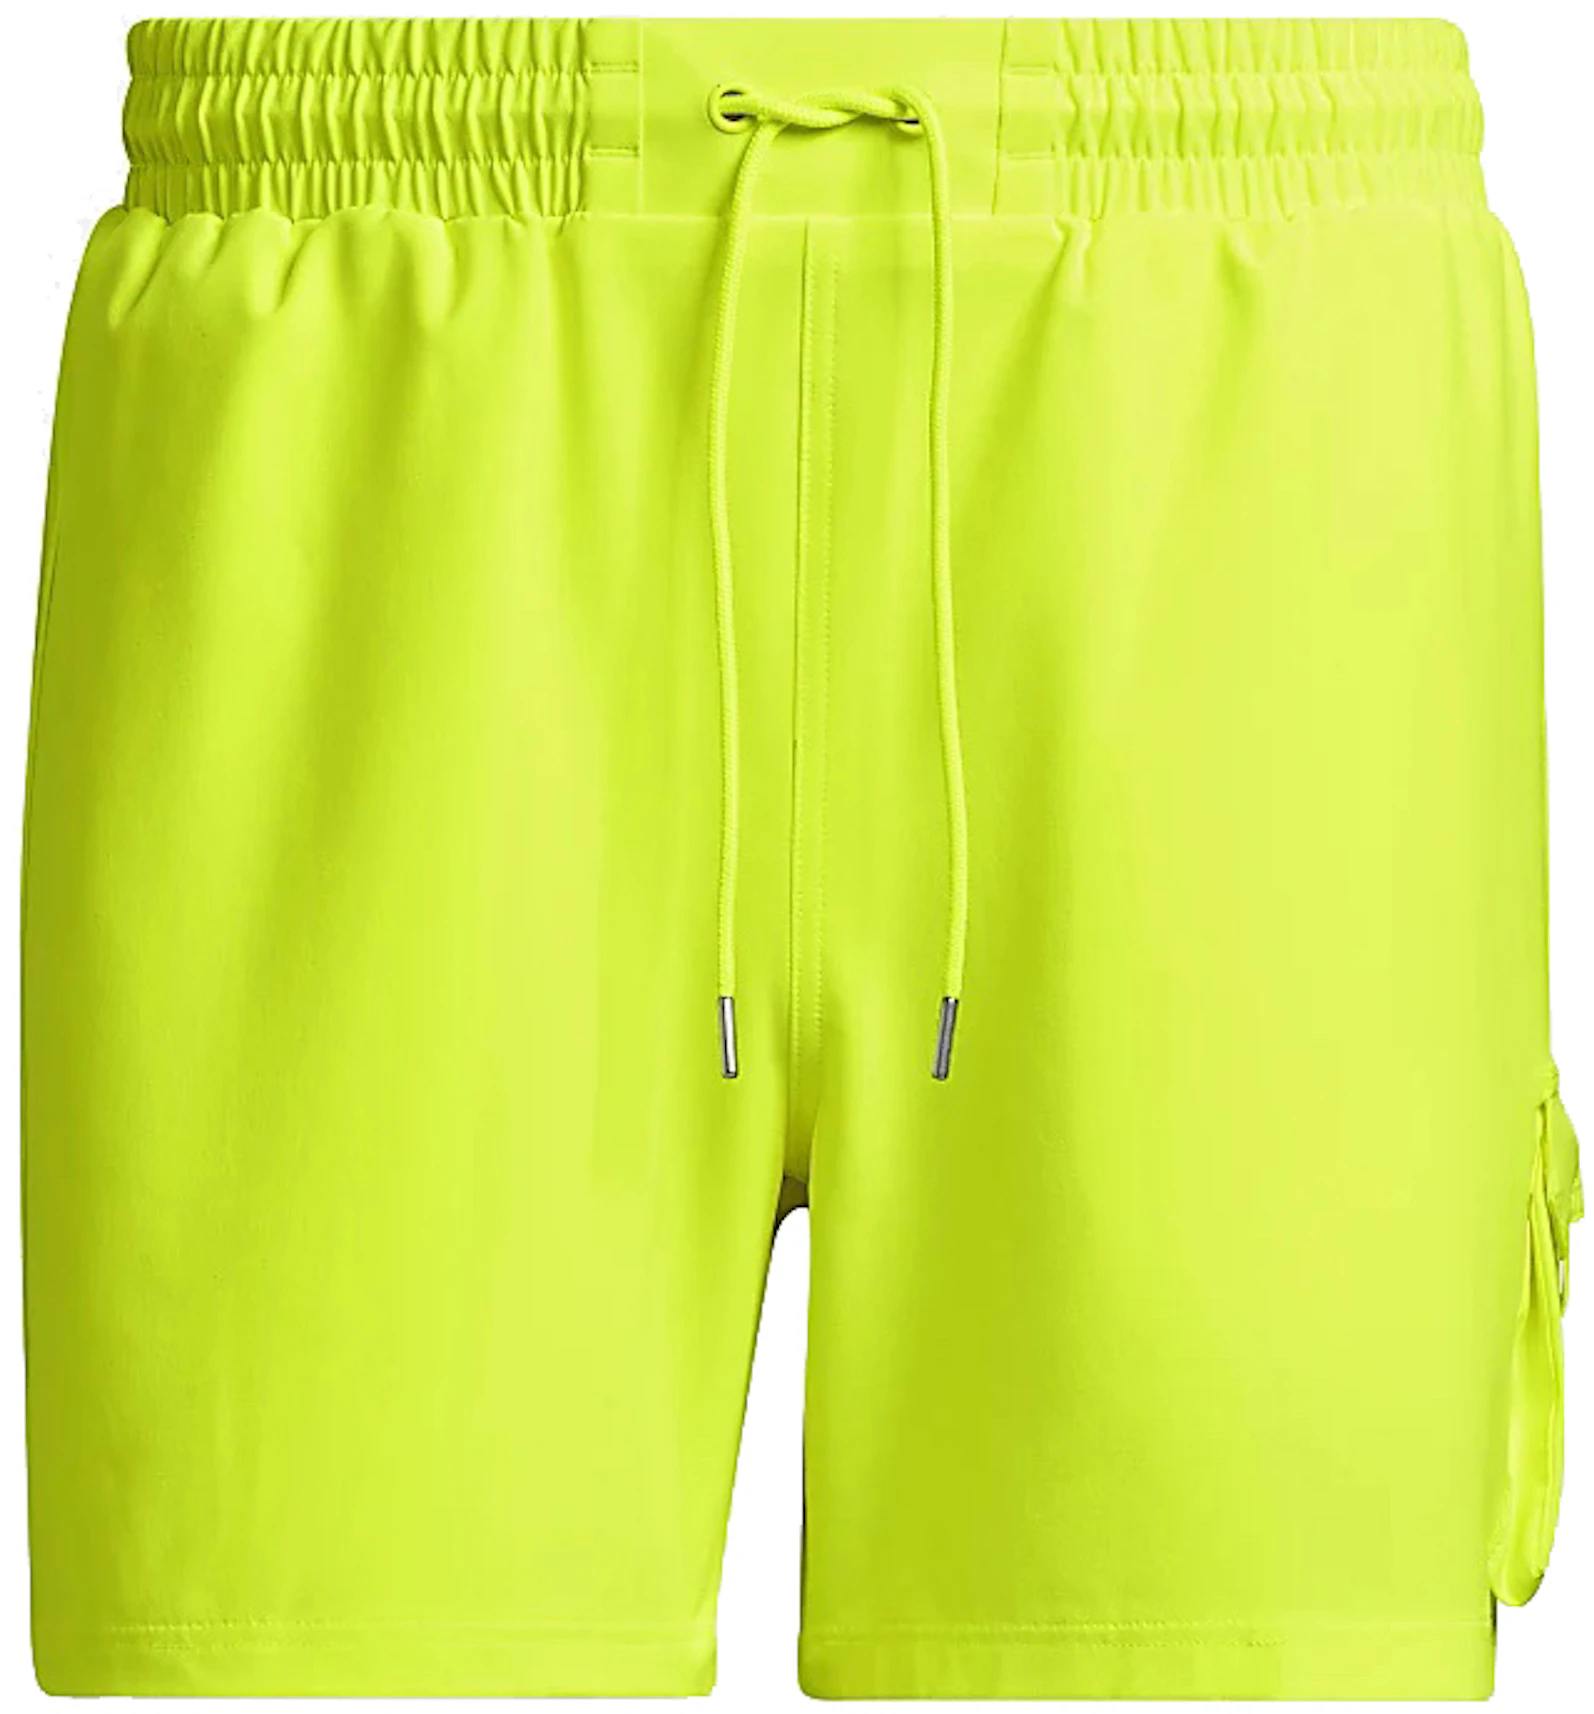 Mentaliteit perzik Klaar adidas Ivy Park Swim Shorts Solar Yellow - SS22 - US